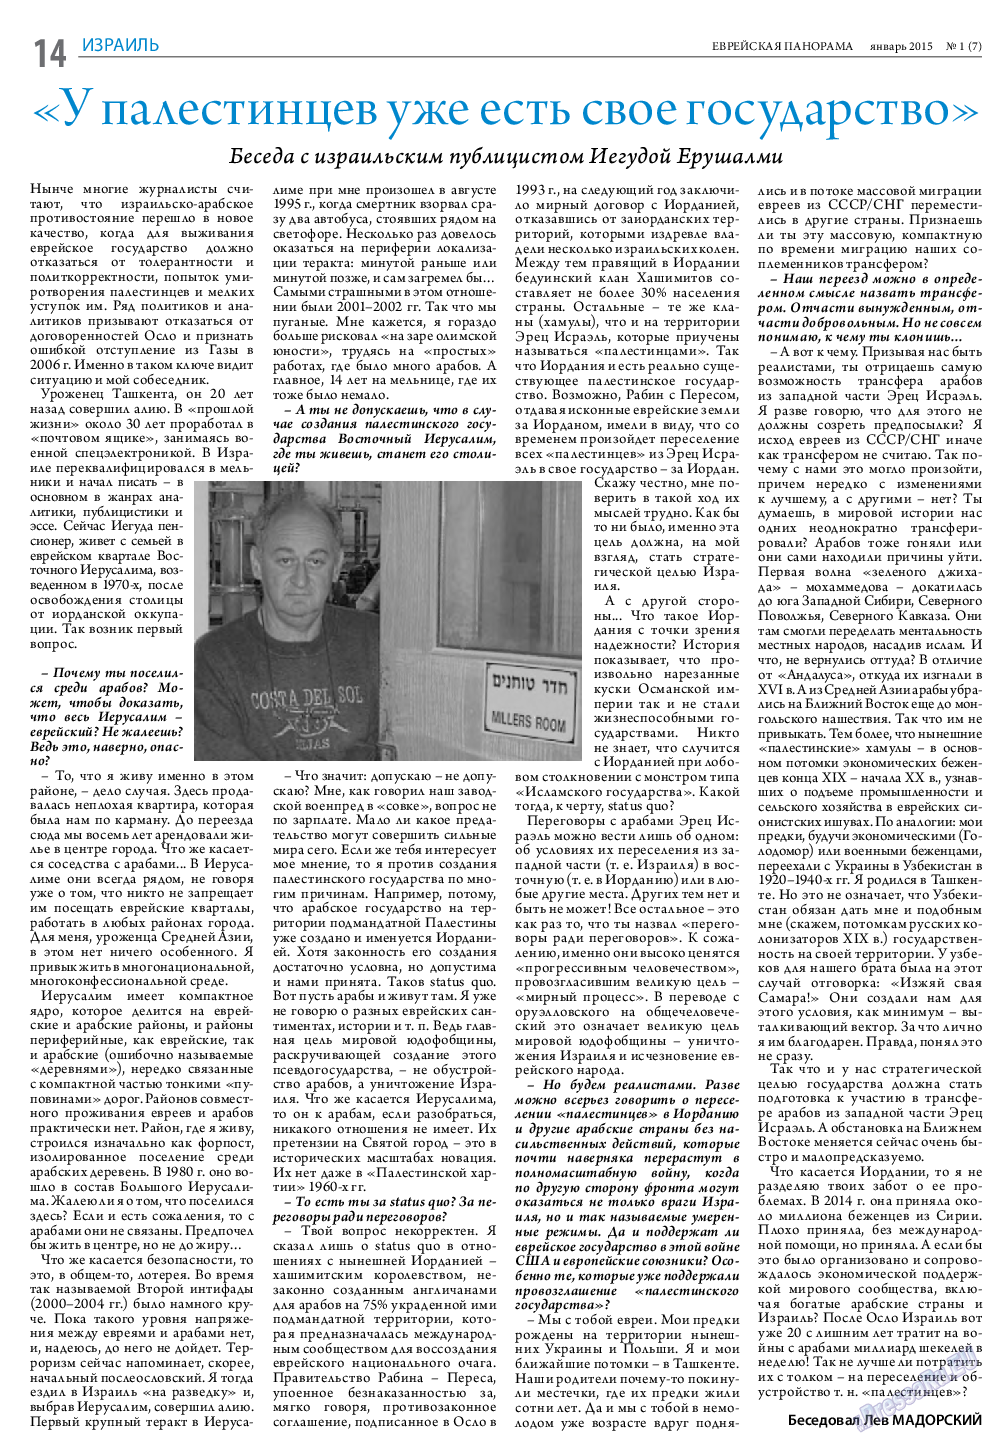 Еврейская панорама, газета. 2015 №1 стр.14